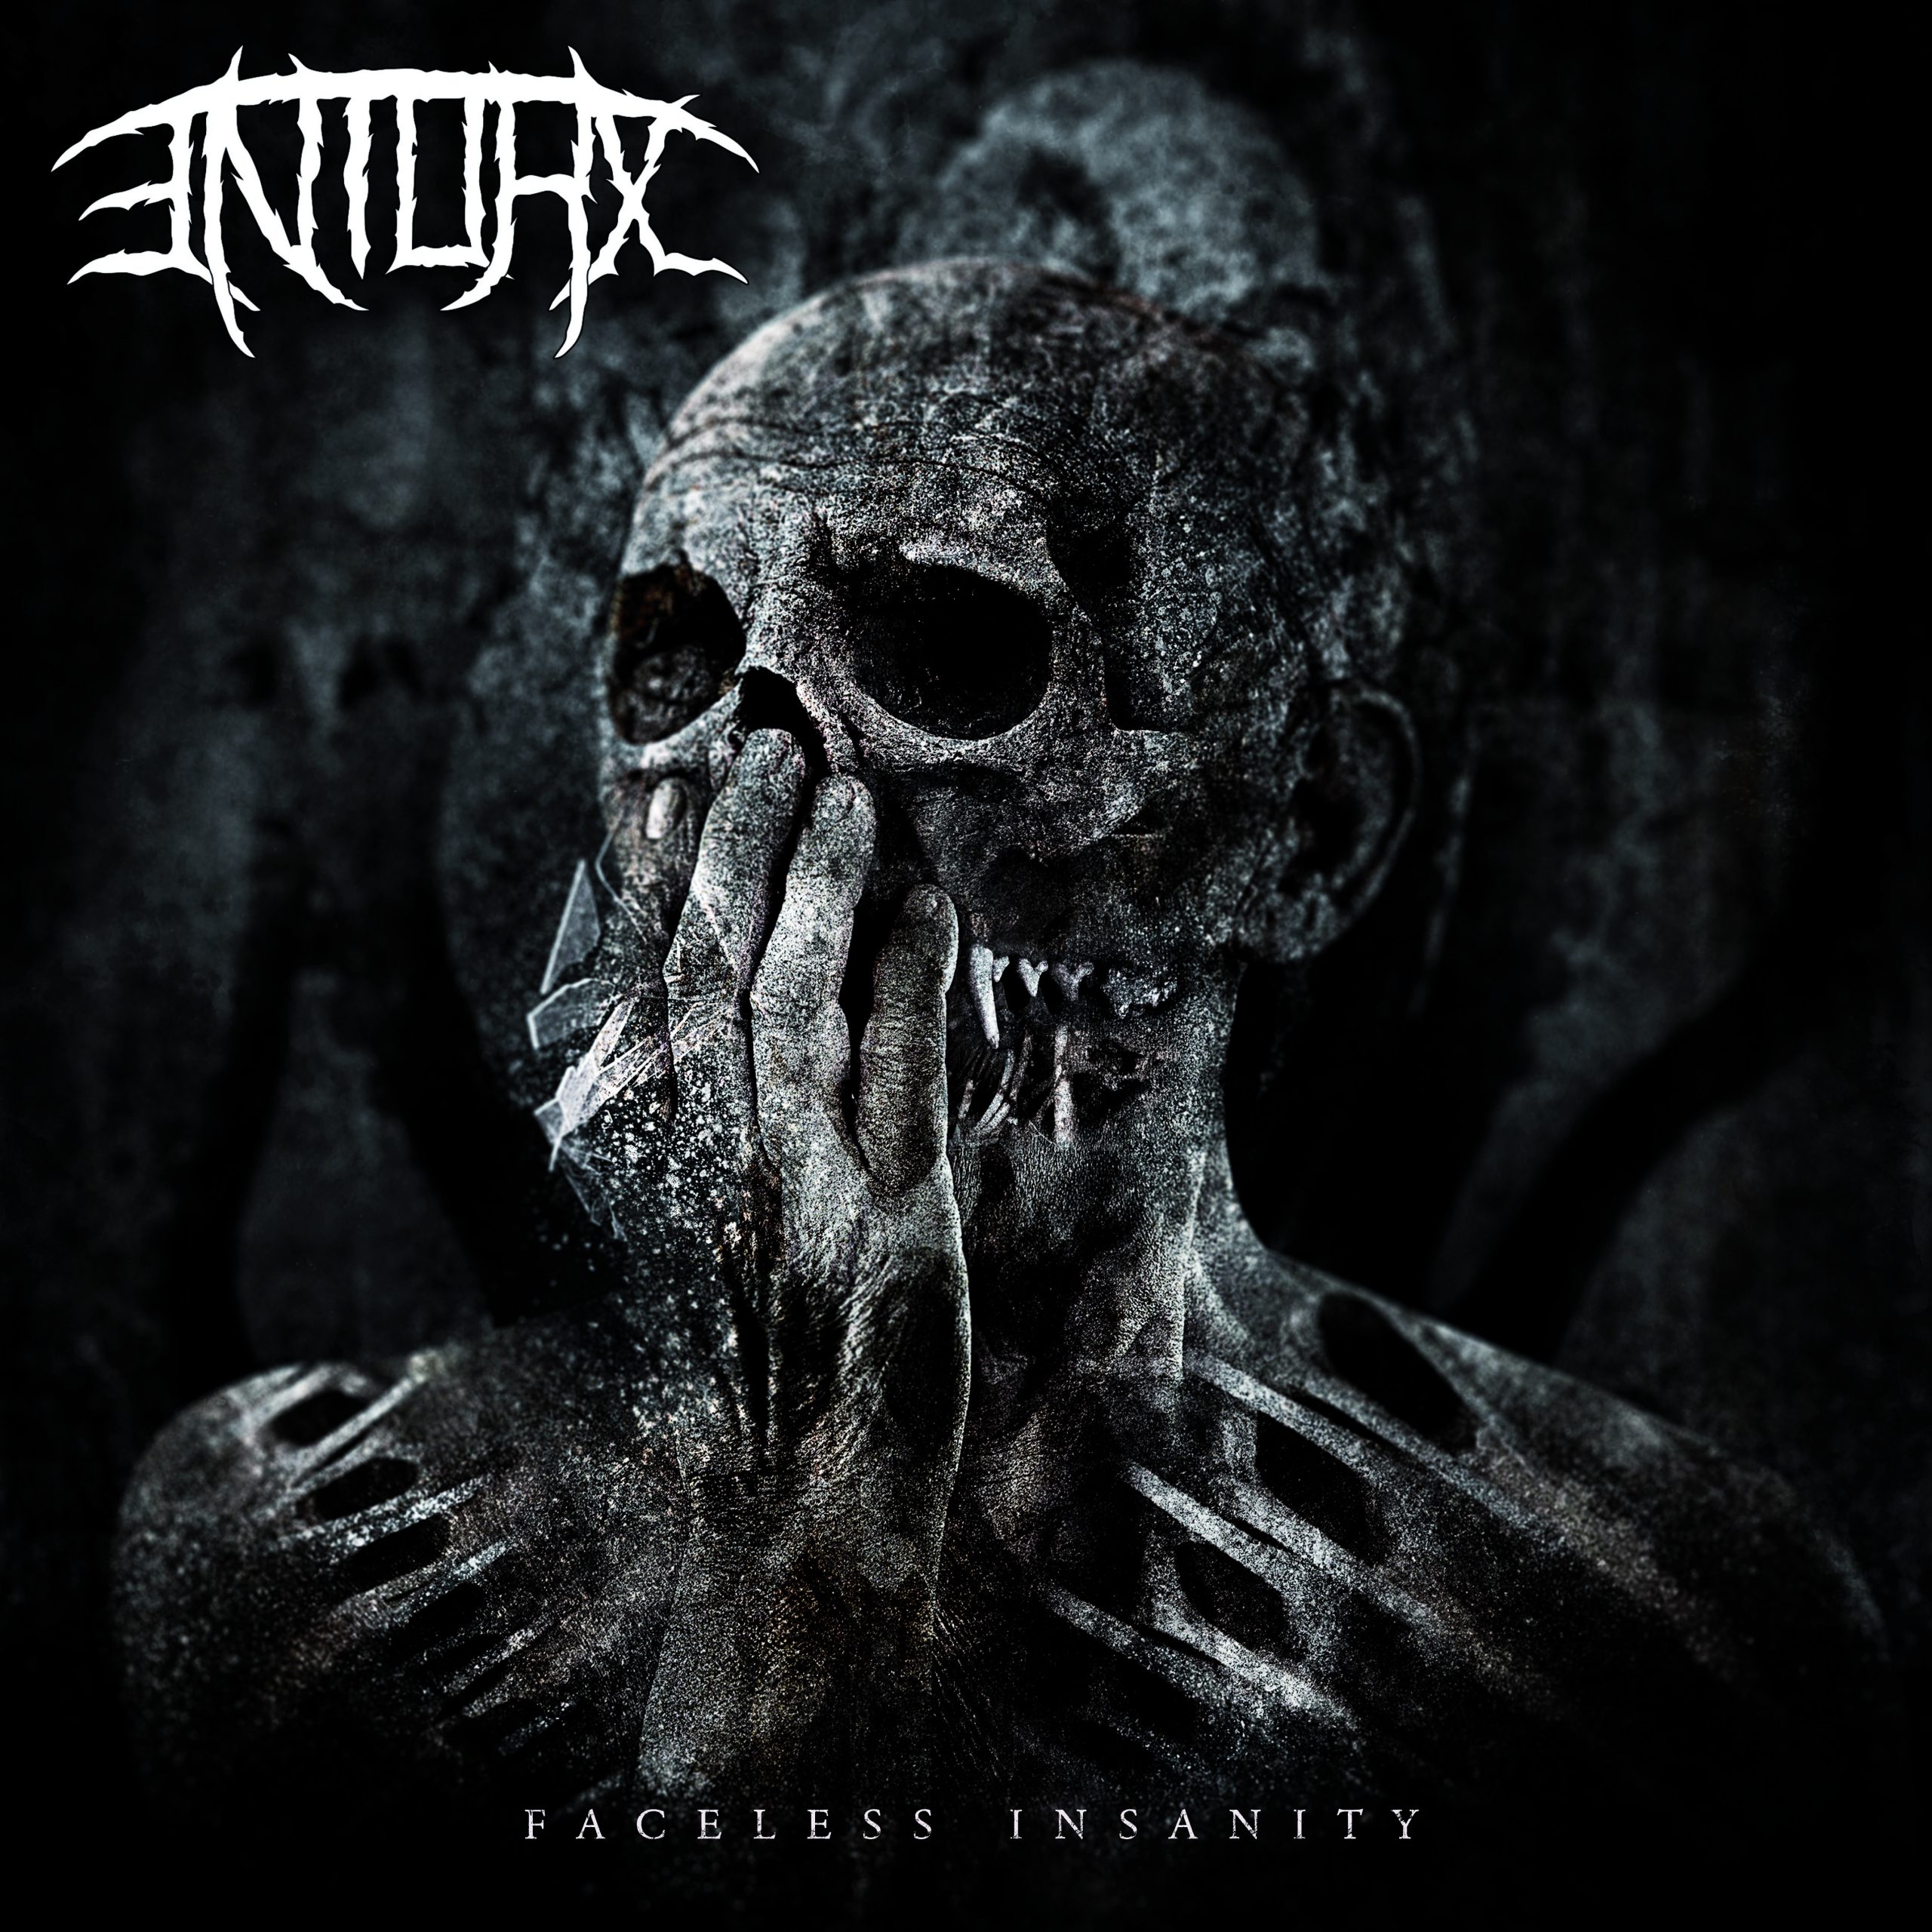 entorx-faceless-insanity-geht-nicht-gibts-nicht-album-review